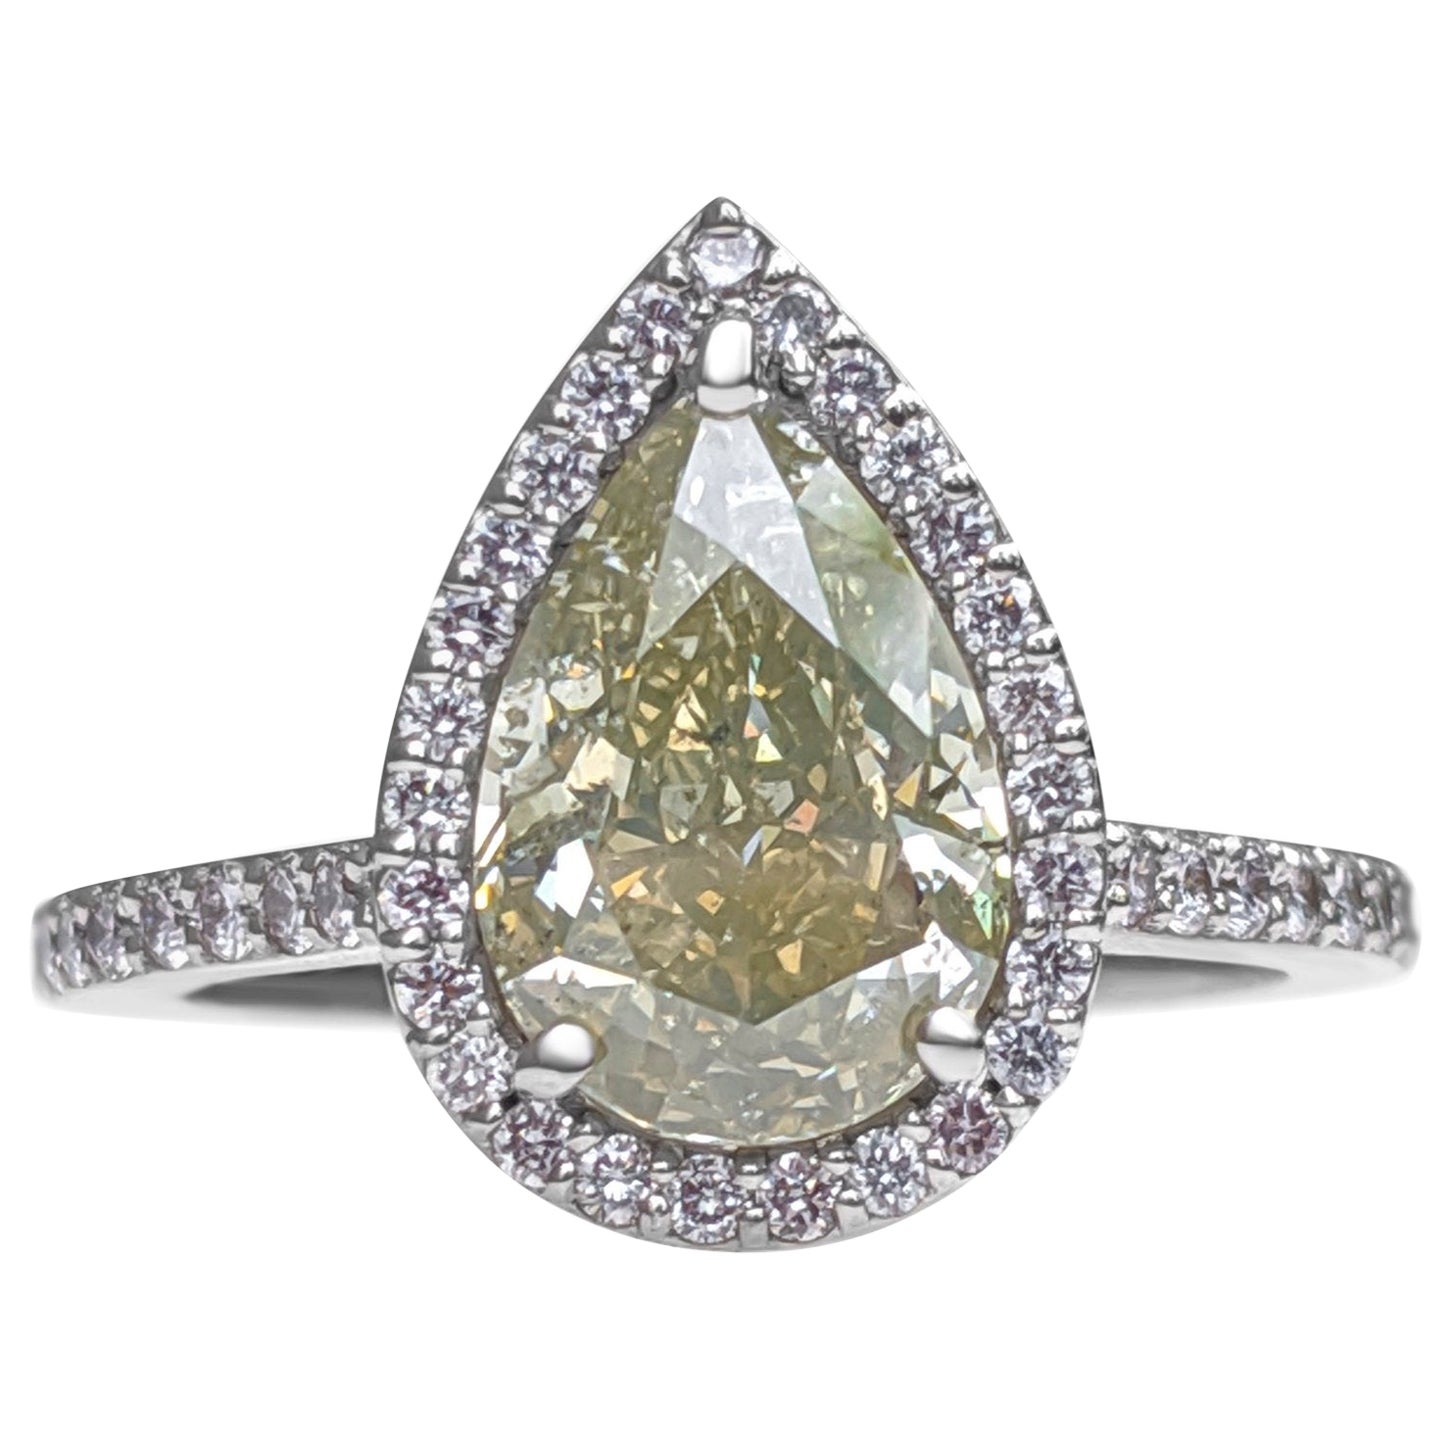 NO RESERVE! IGI 3.10 cttw Fancy Greenish Yellow Diamonds - 18K White Ring